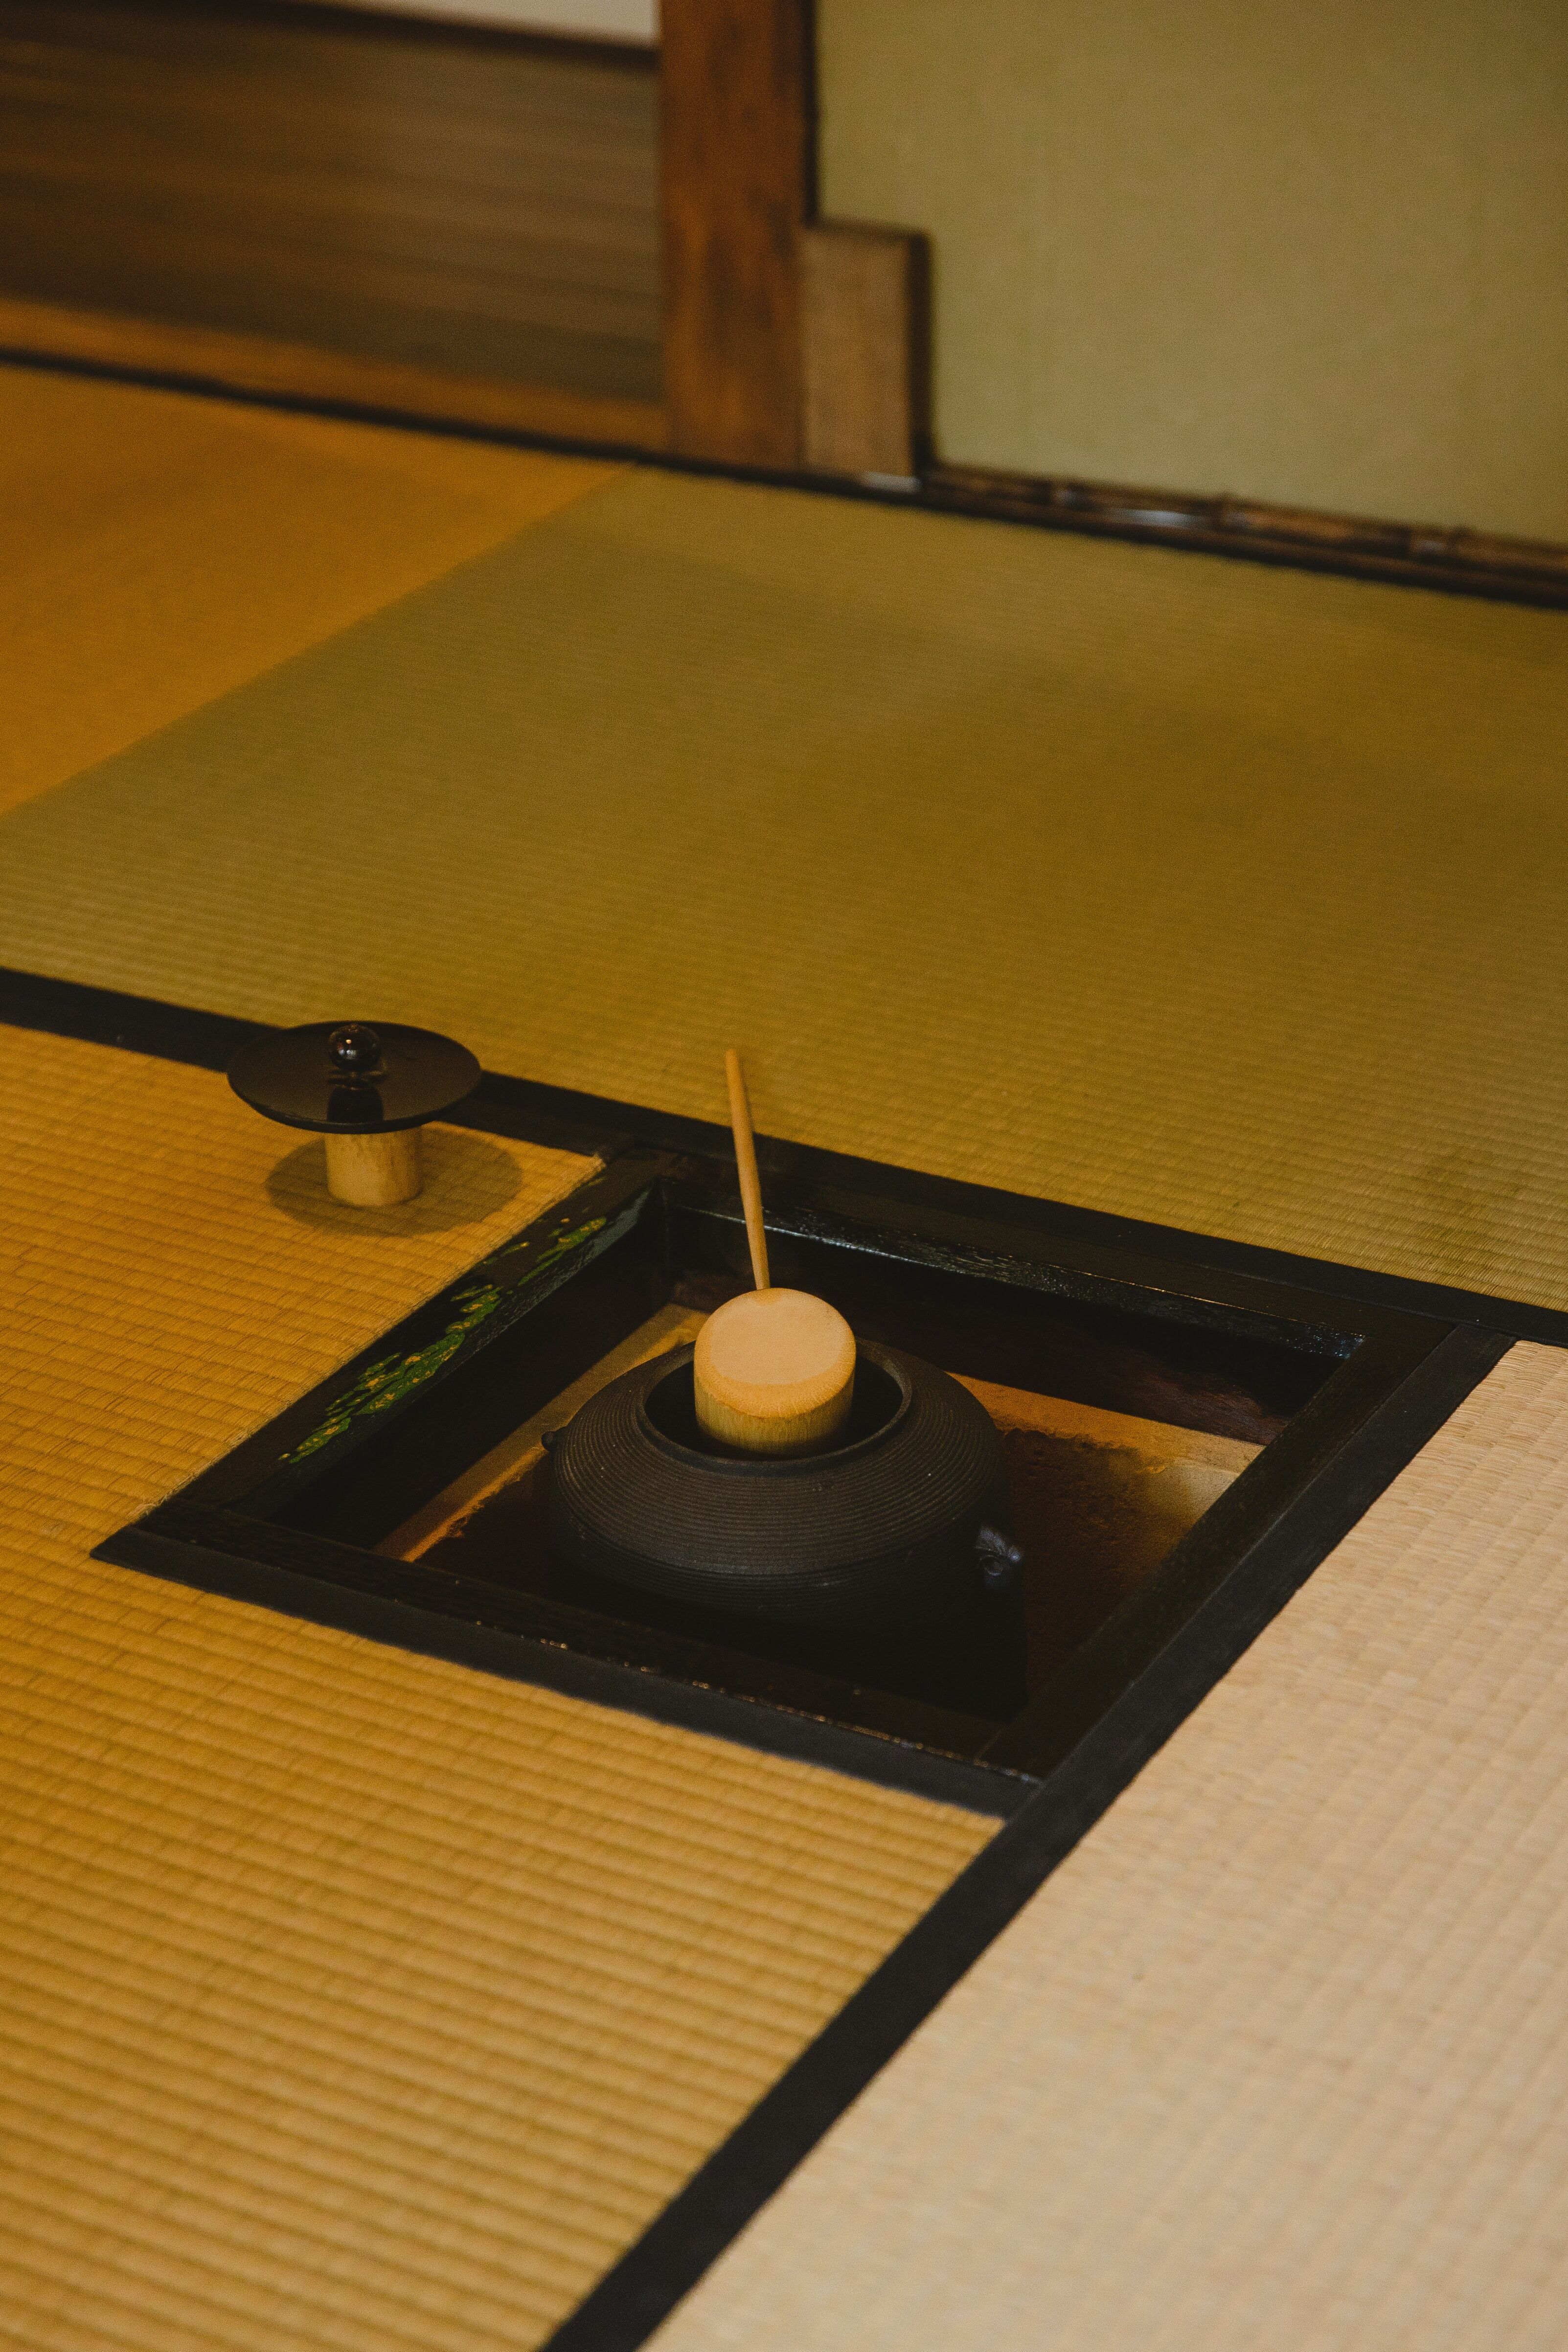 Enshu-ryu Tea Whisk for Thick Tea - Koicha tea ceremony whisk